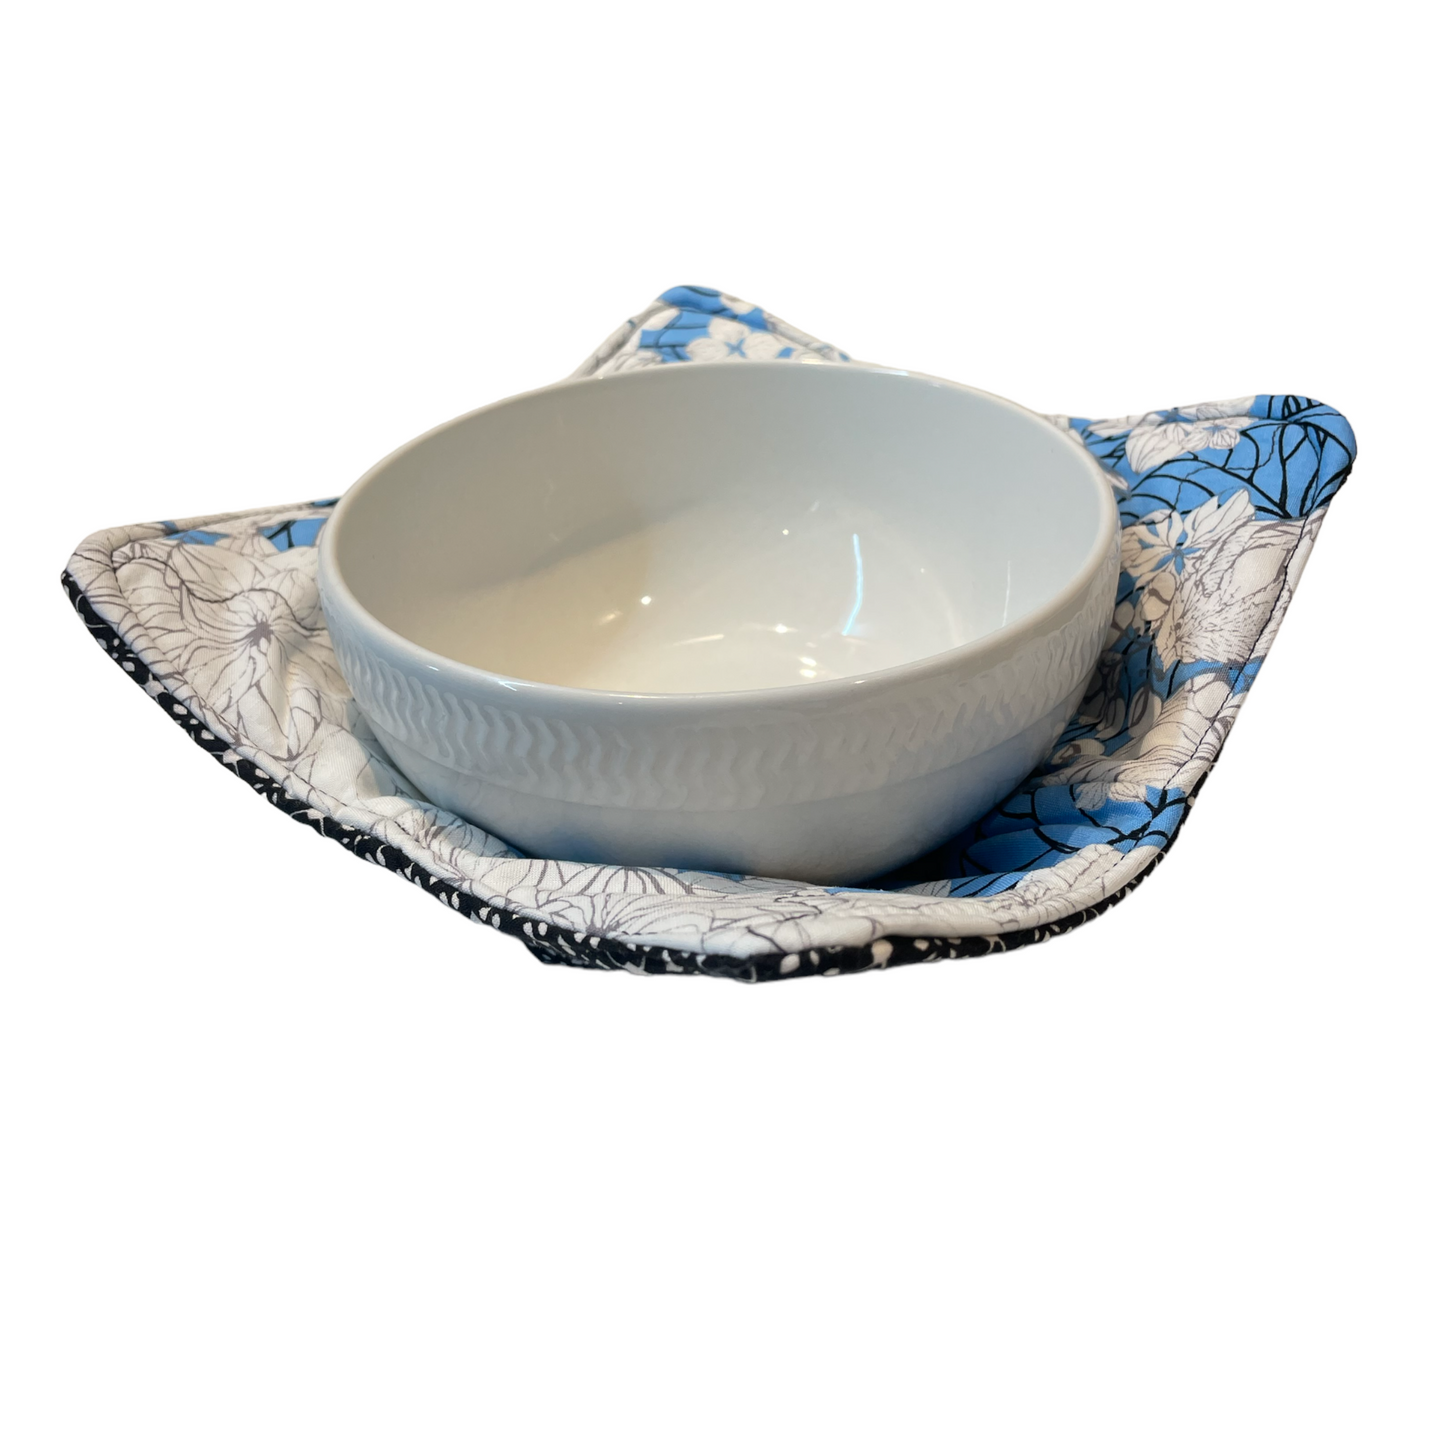 Black Soup Bowl Cozy | Black and Blue Soup Bowl Hugger | Microwave Bowl Cozy - Home Stitchery Decor